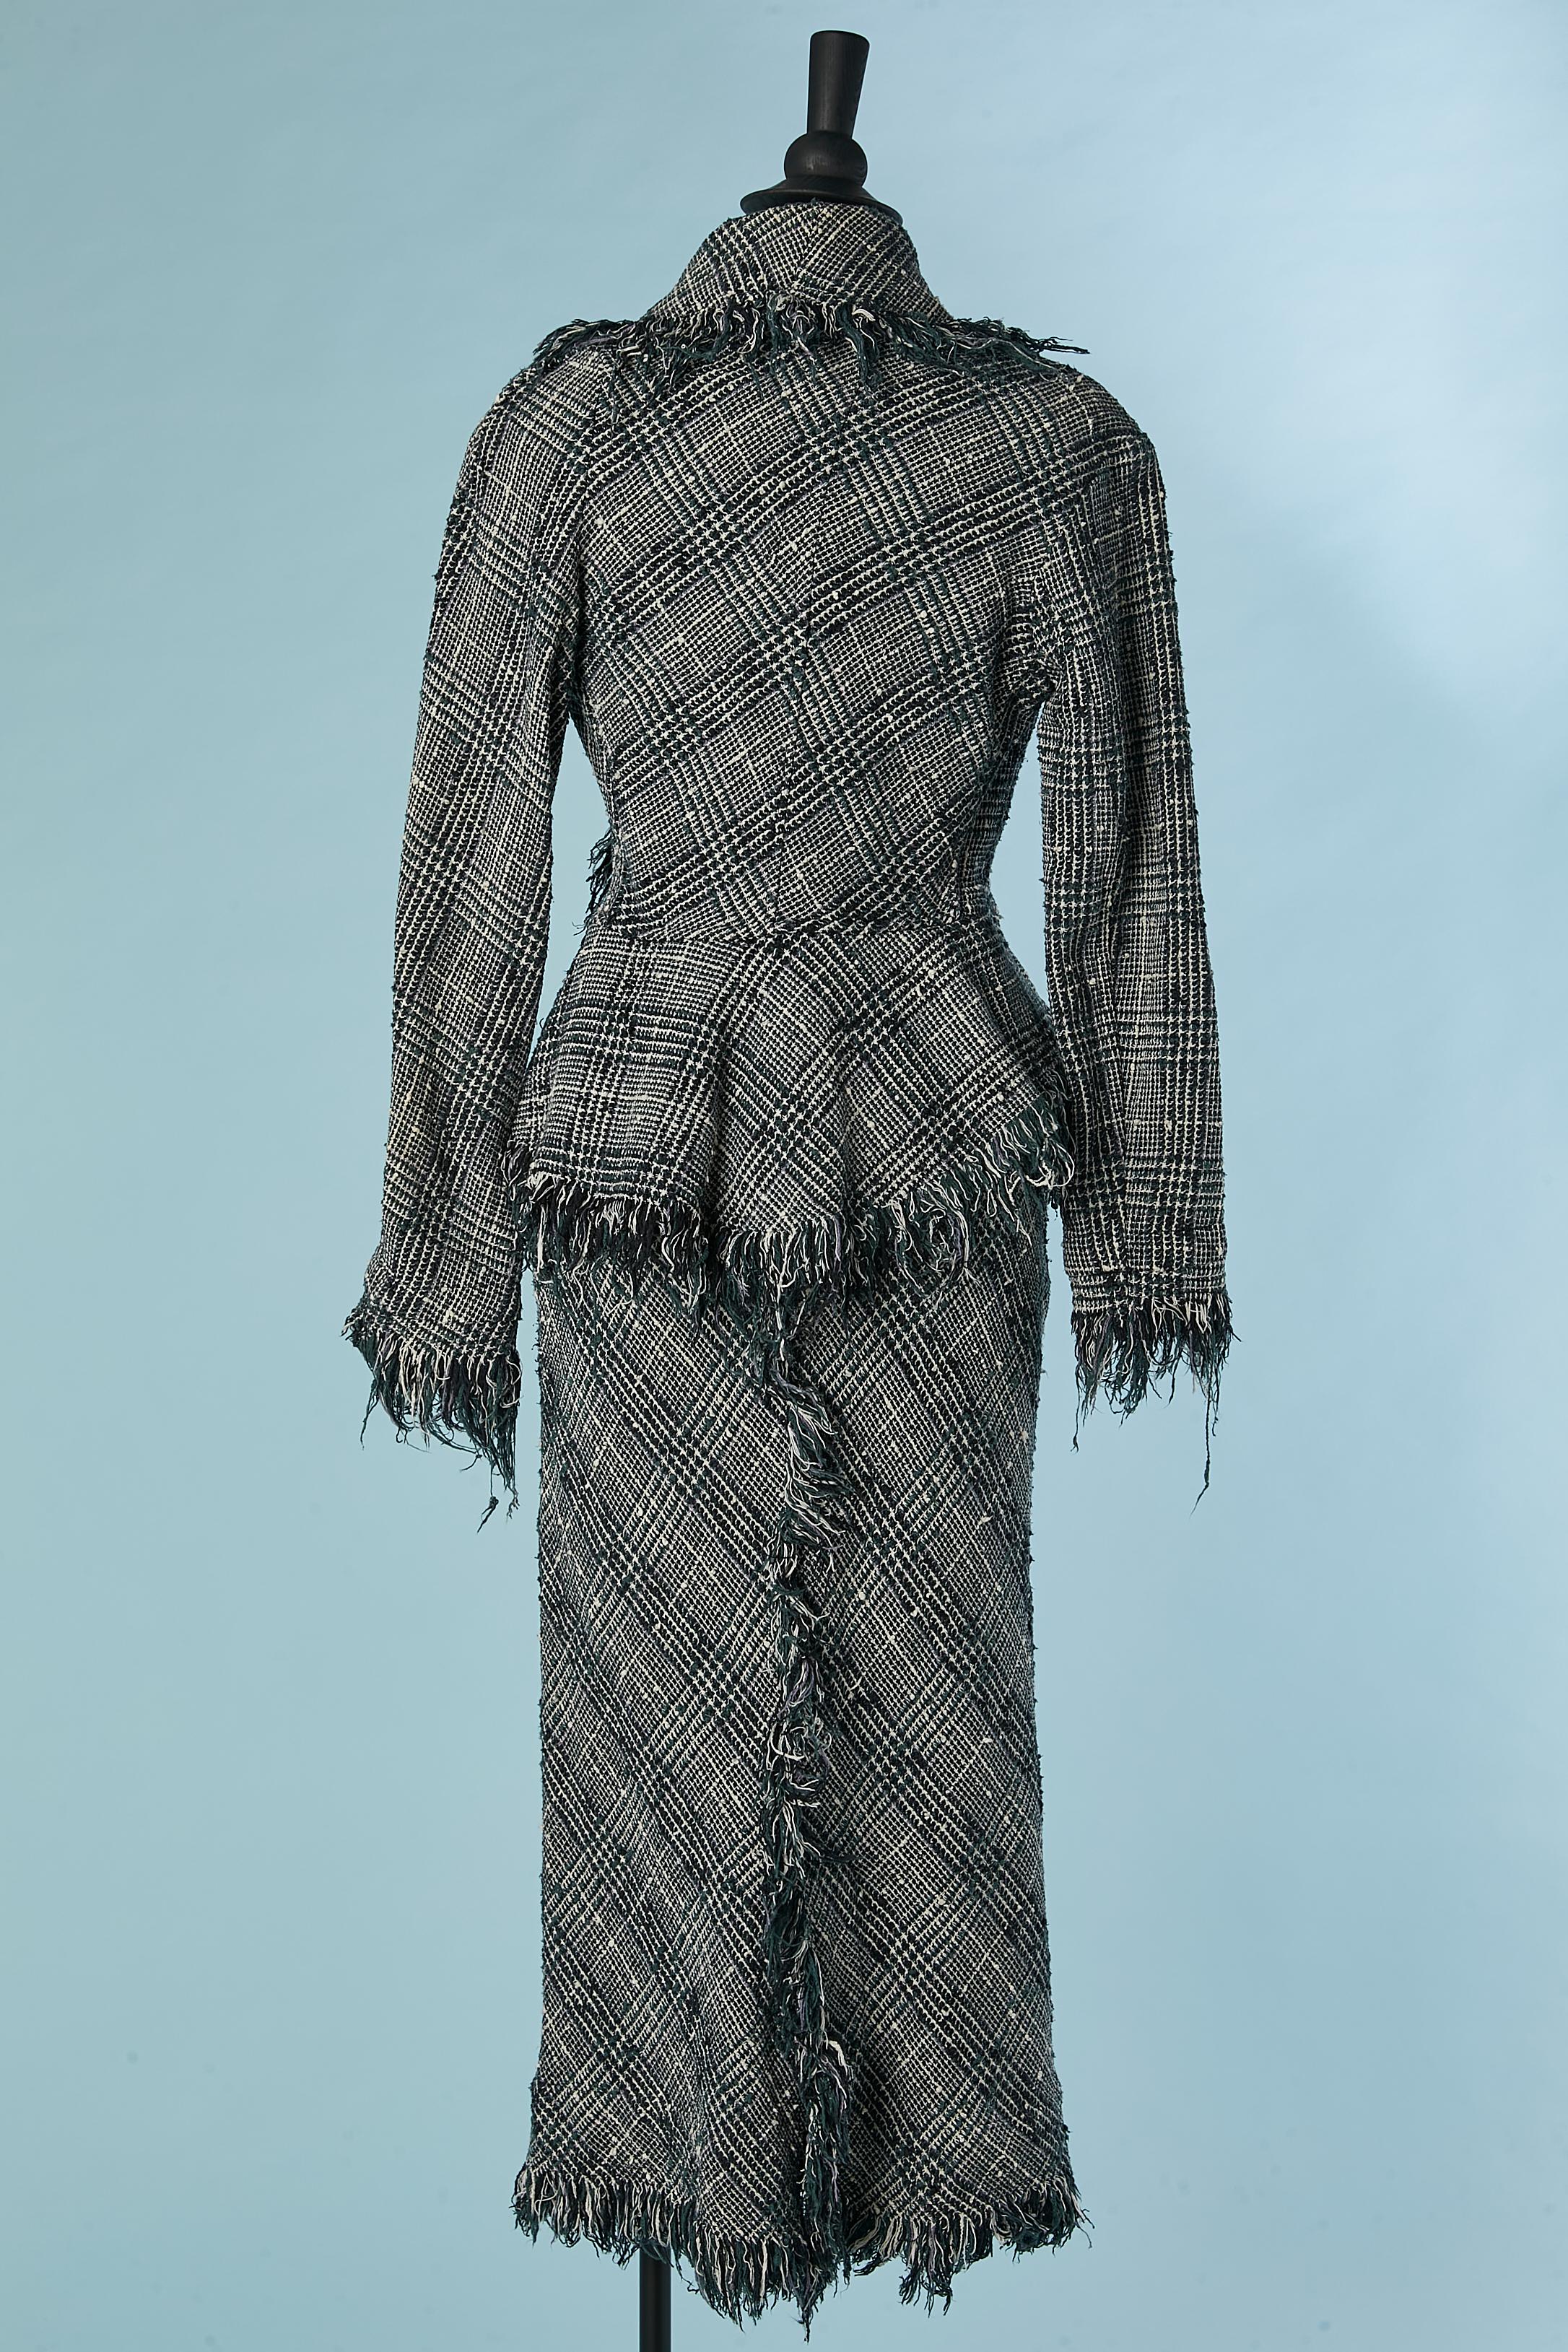 Cotton tweed skirt suit with fringes edges Vivian Westwood Gold Label  For Sale 2